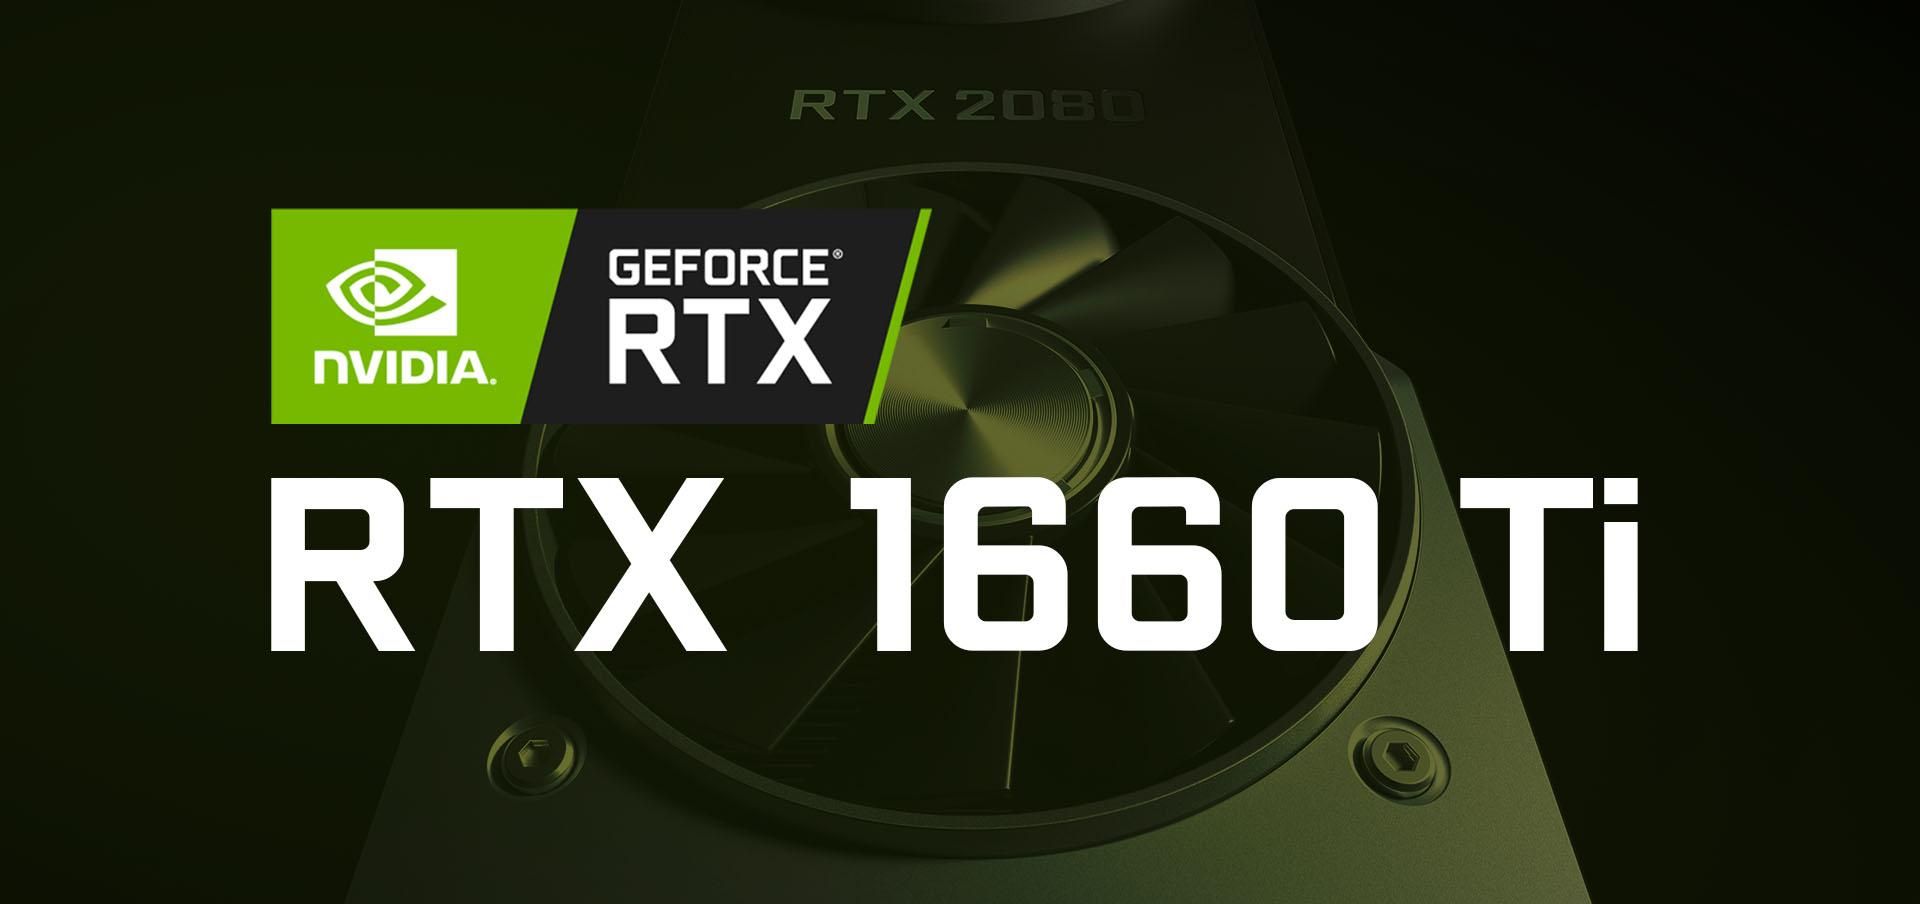 Видеокарты NVIDIA GeForce GTX 1660 Ti представили официально: характеристики и цена